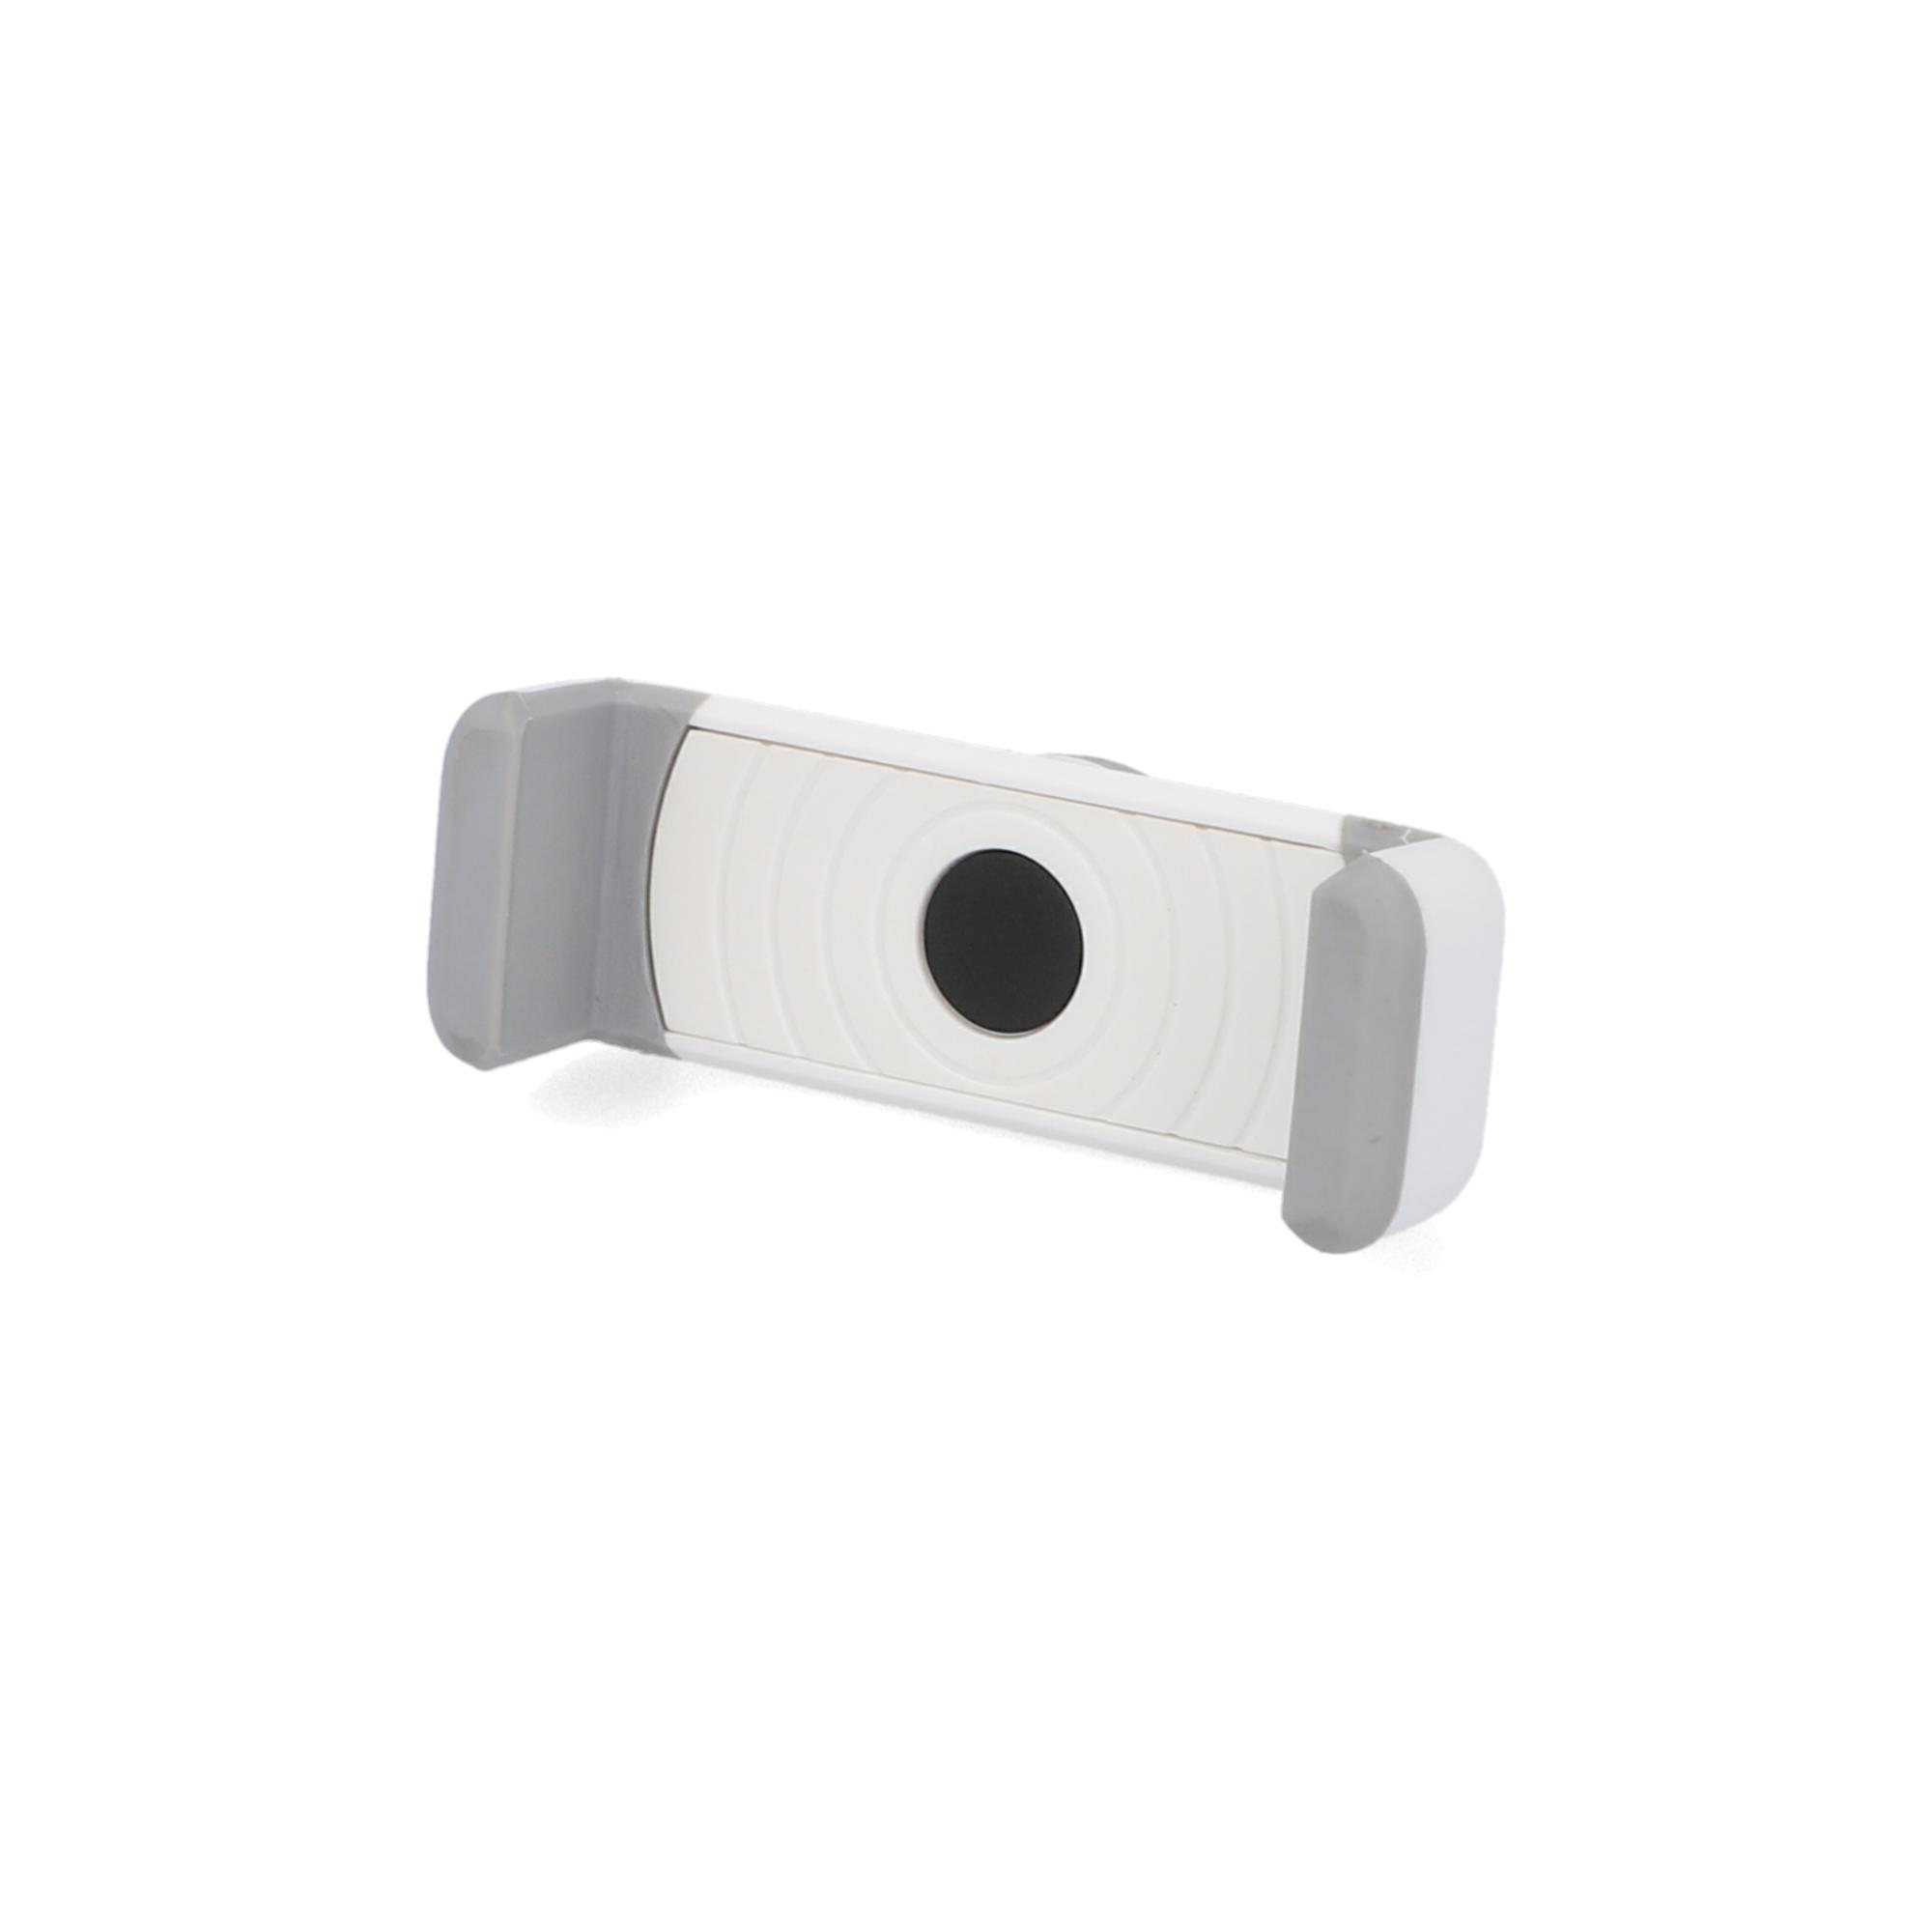 Smartphonehalterung grau/weiß für KFZ-Lüftungslamellen + product picture